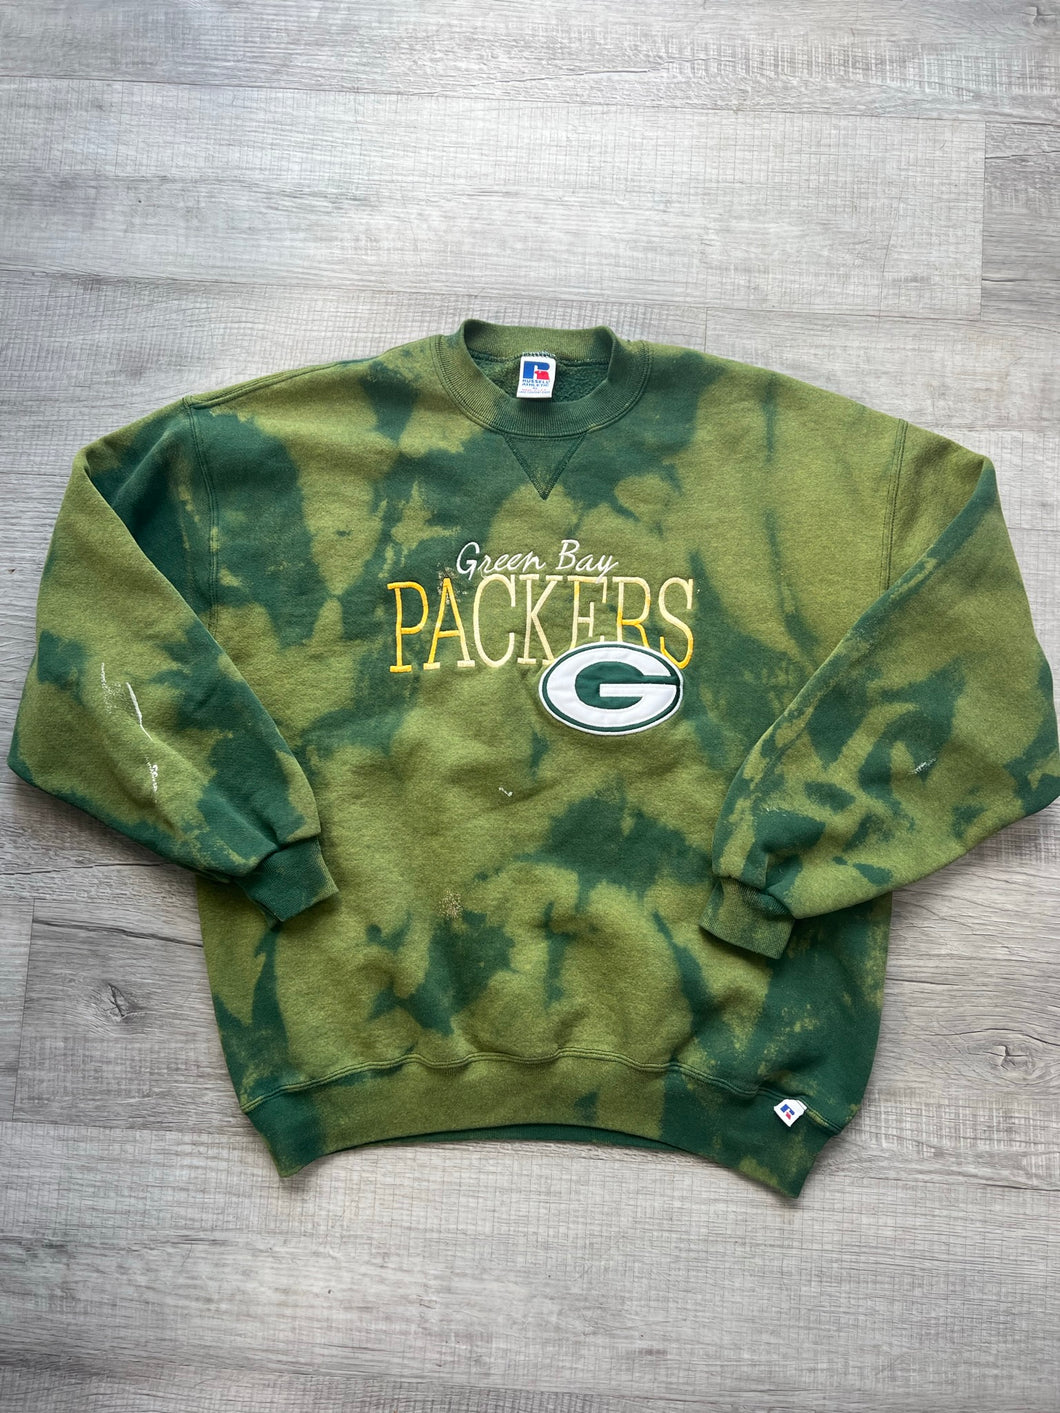 Vintage Green Day Packers Bleach Dye Crewneck